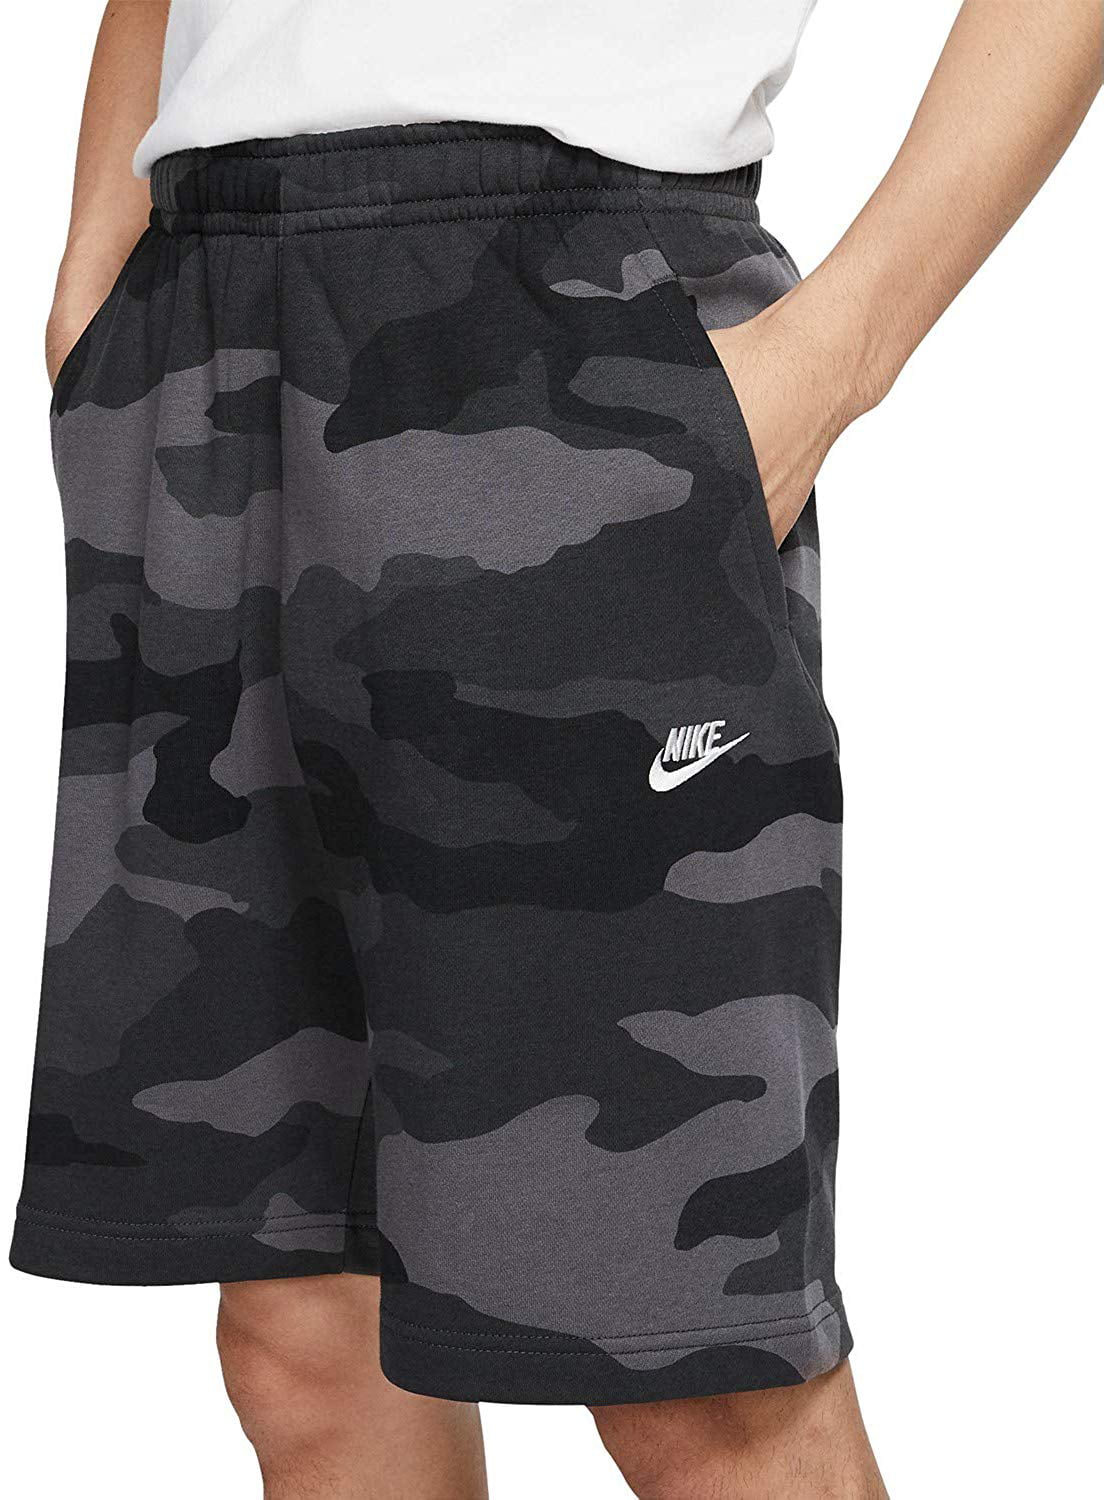 Nike - Nike Men's Sportswear Club Fleece Camo Shorts - Walmart.com ...